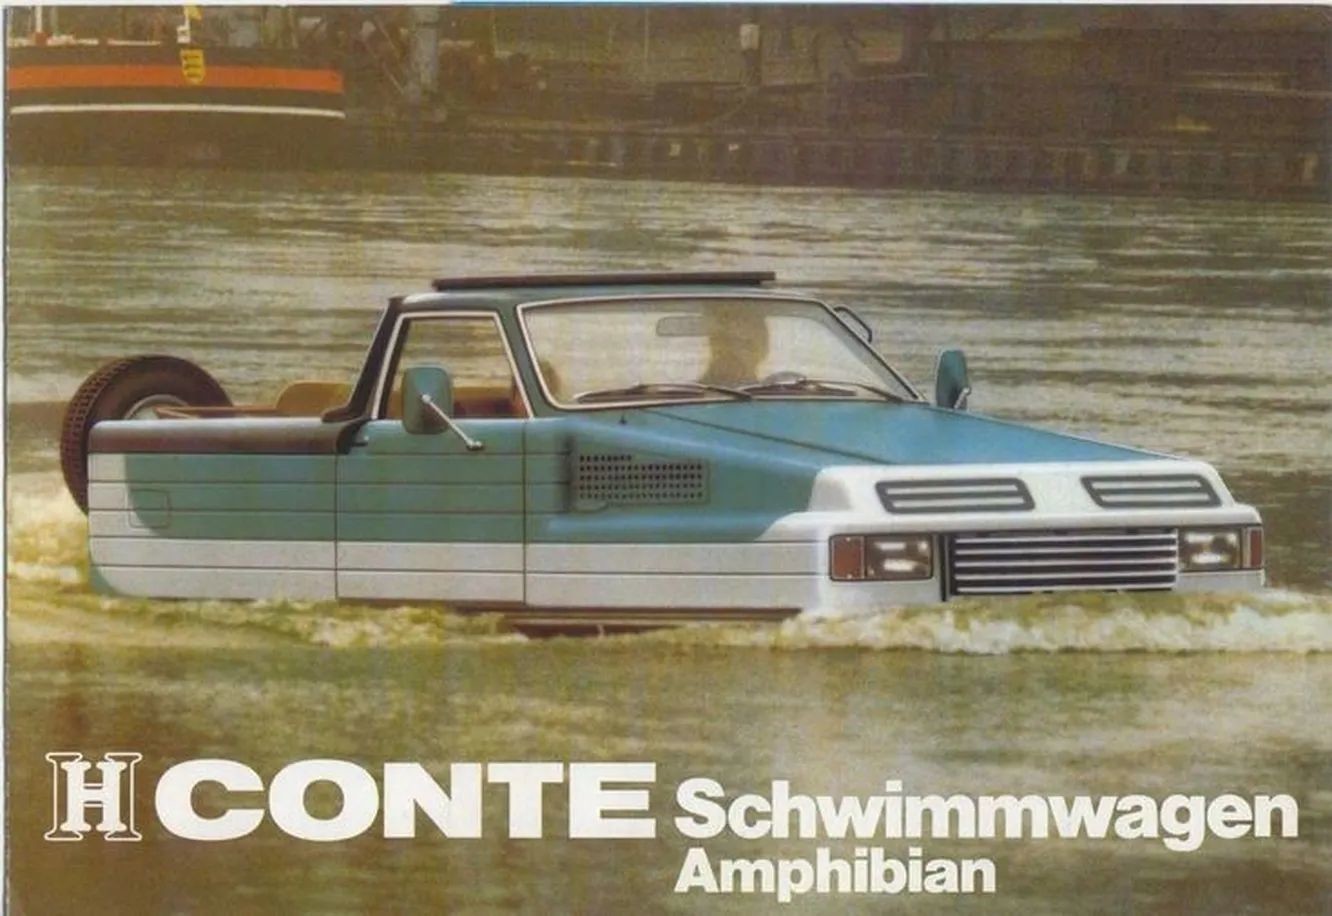 Внедорожник-амфибия Herzog Conte Schwimmwagen 1979 года